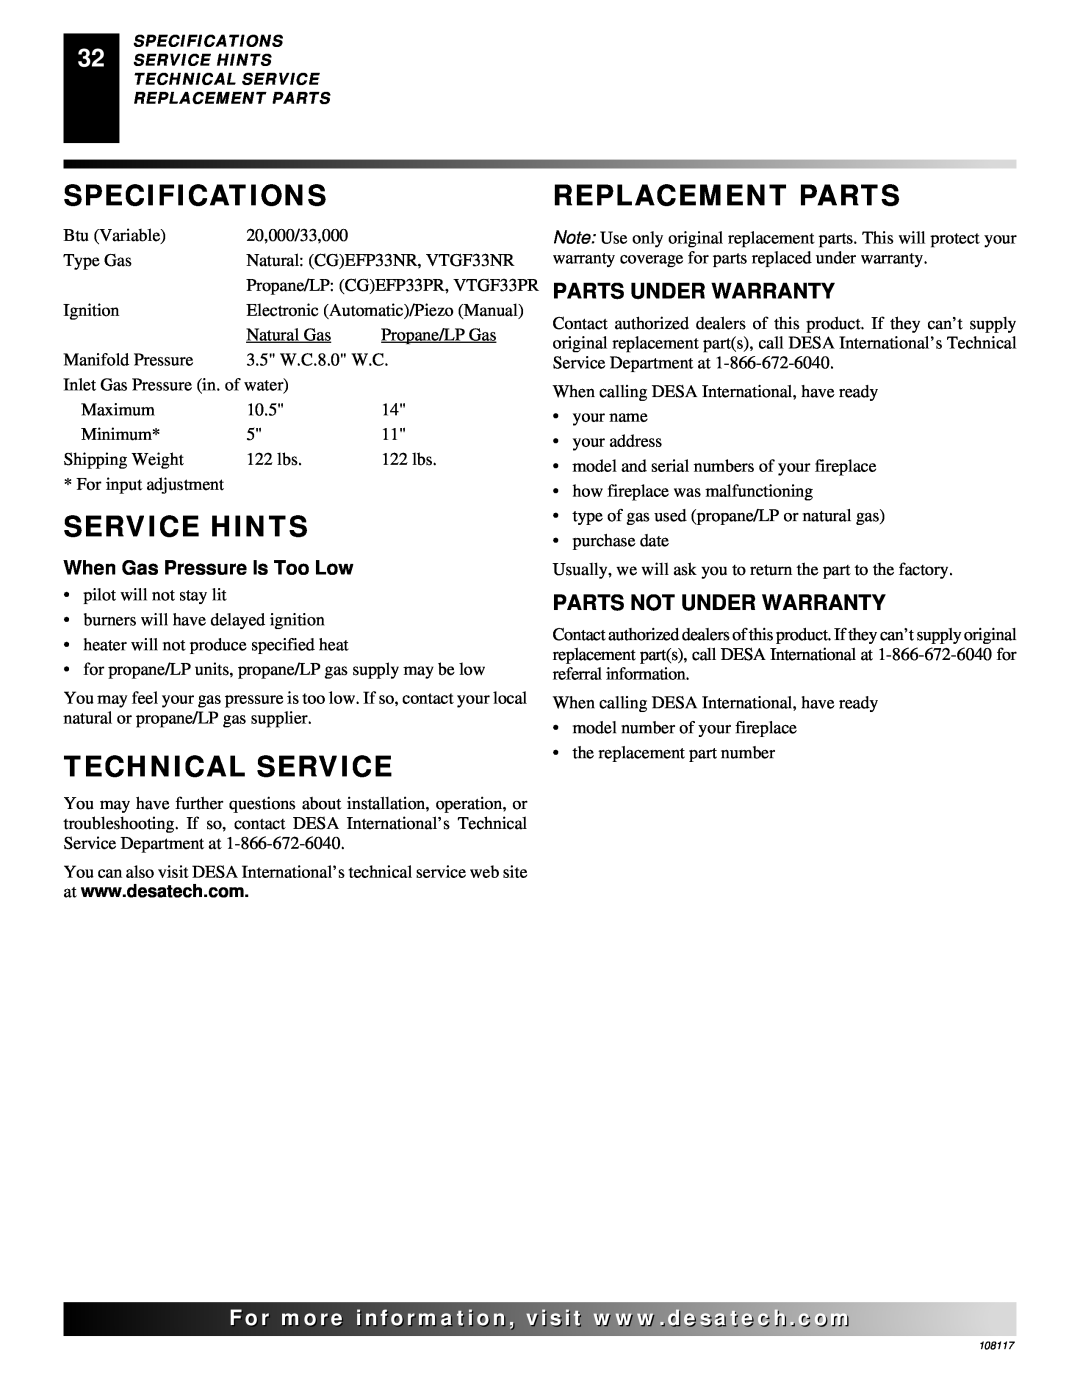 Desa CGEFP33PR, VTGF33NR Specifications, Service Hints, Technical Service, Replacement Parts, Parts Under Warranty 